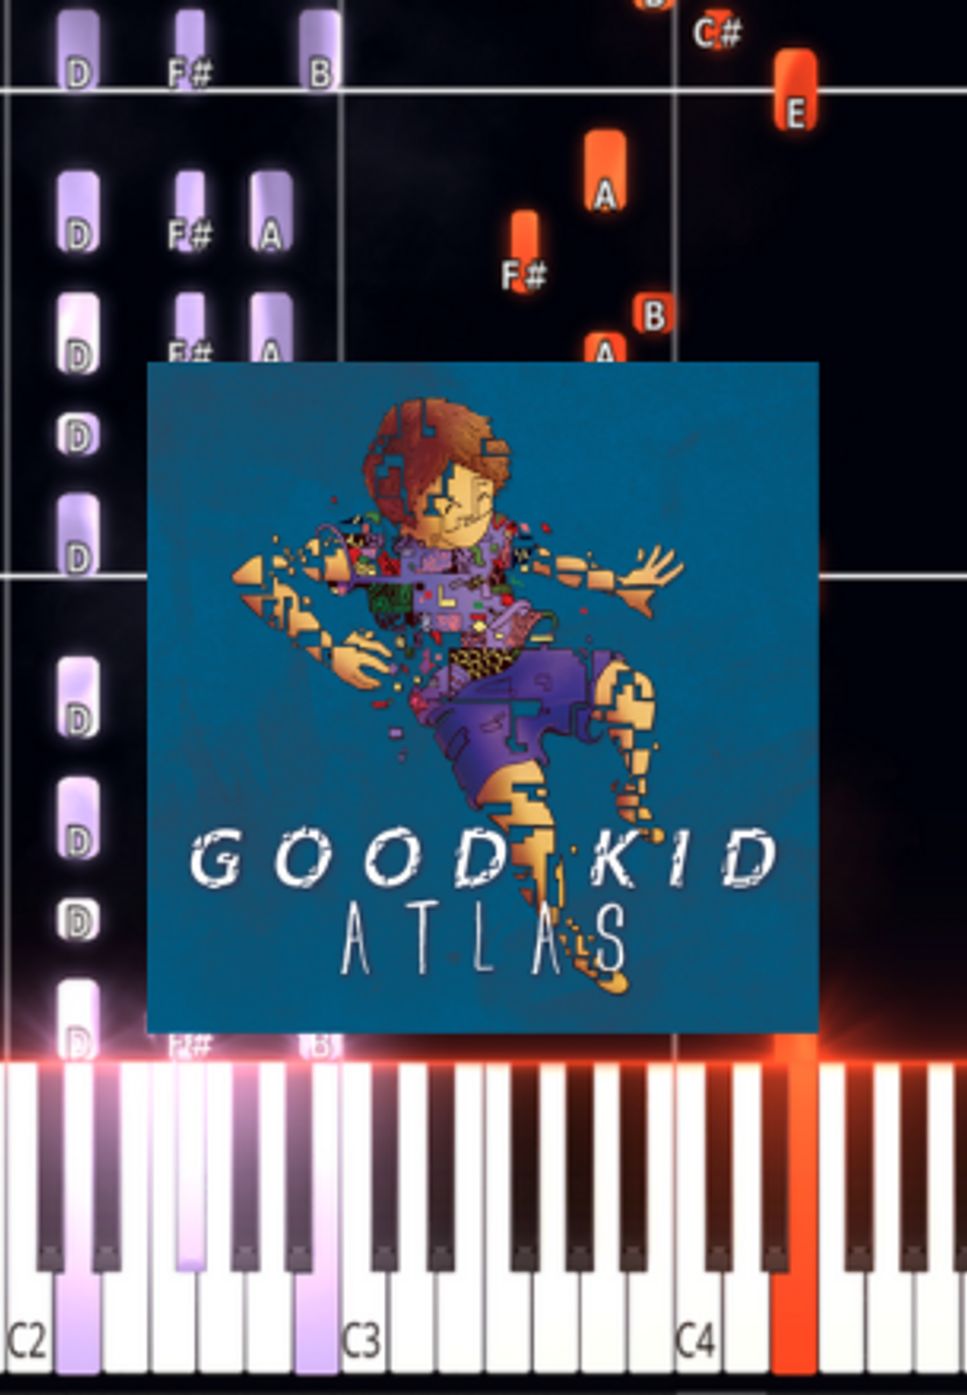 Good Kid - Atlas by Marco D.